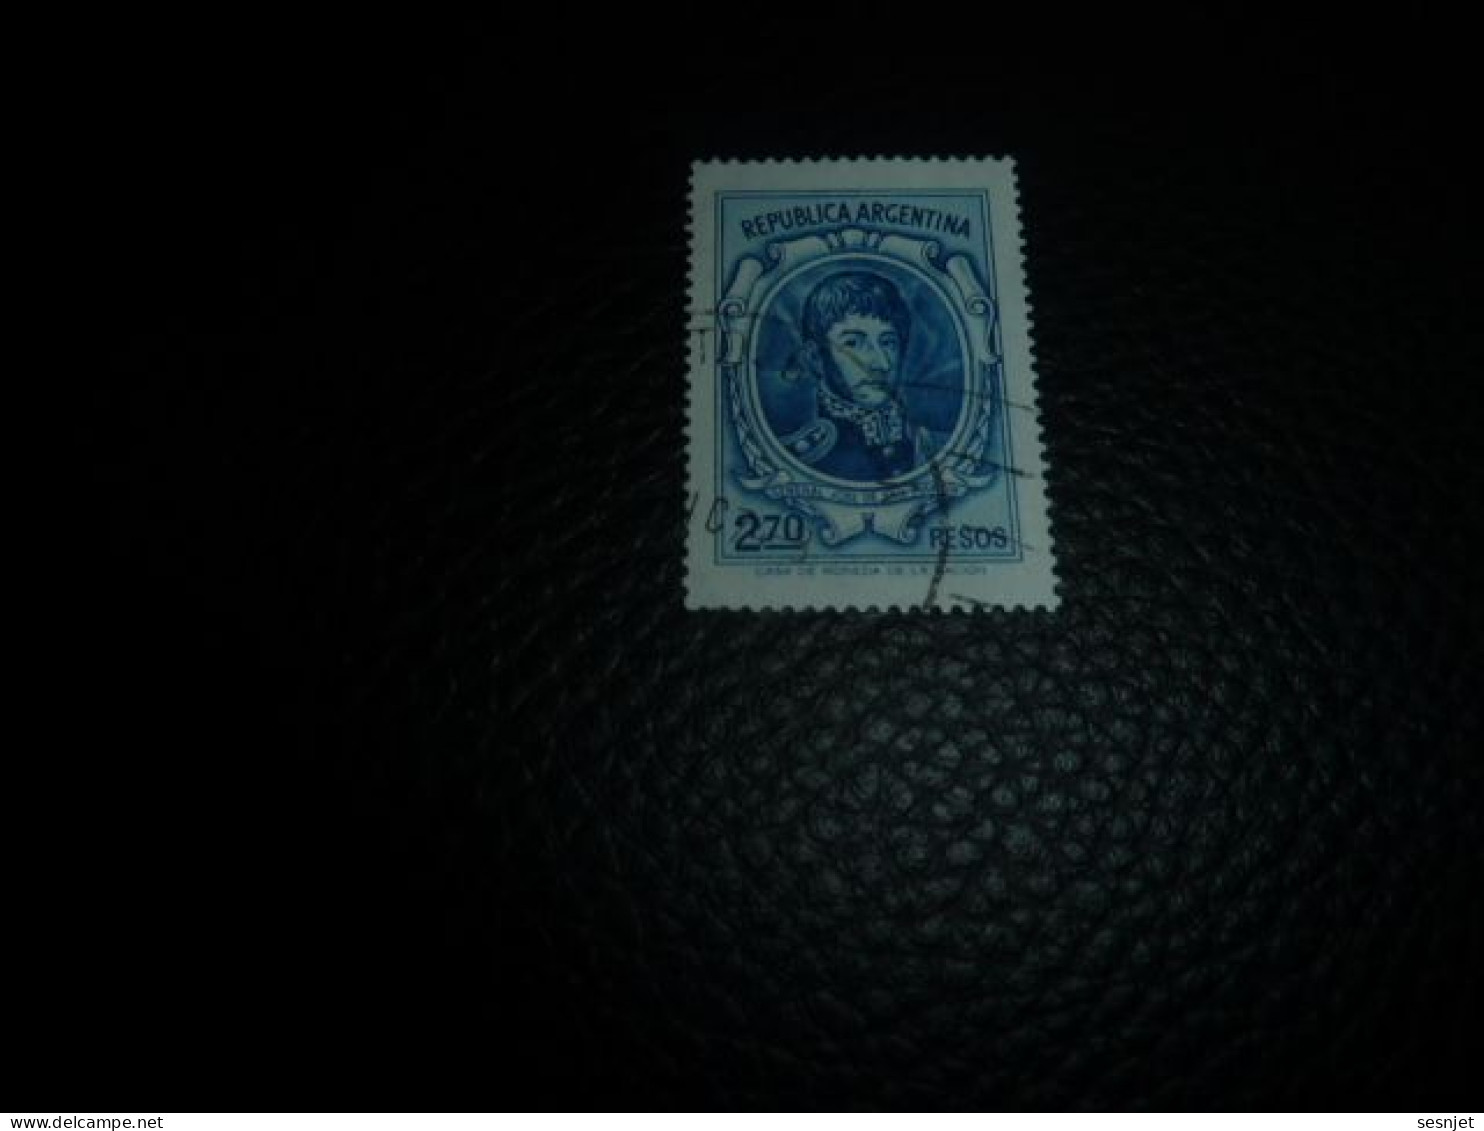 Republica Argentina - Général José De San Martin - 2.70 Pesos - Yt 975 - Bleu - Oblitéré - Année 1974 - - Gebruikt